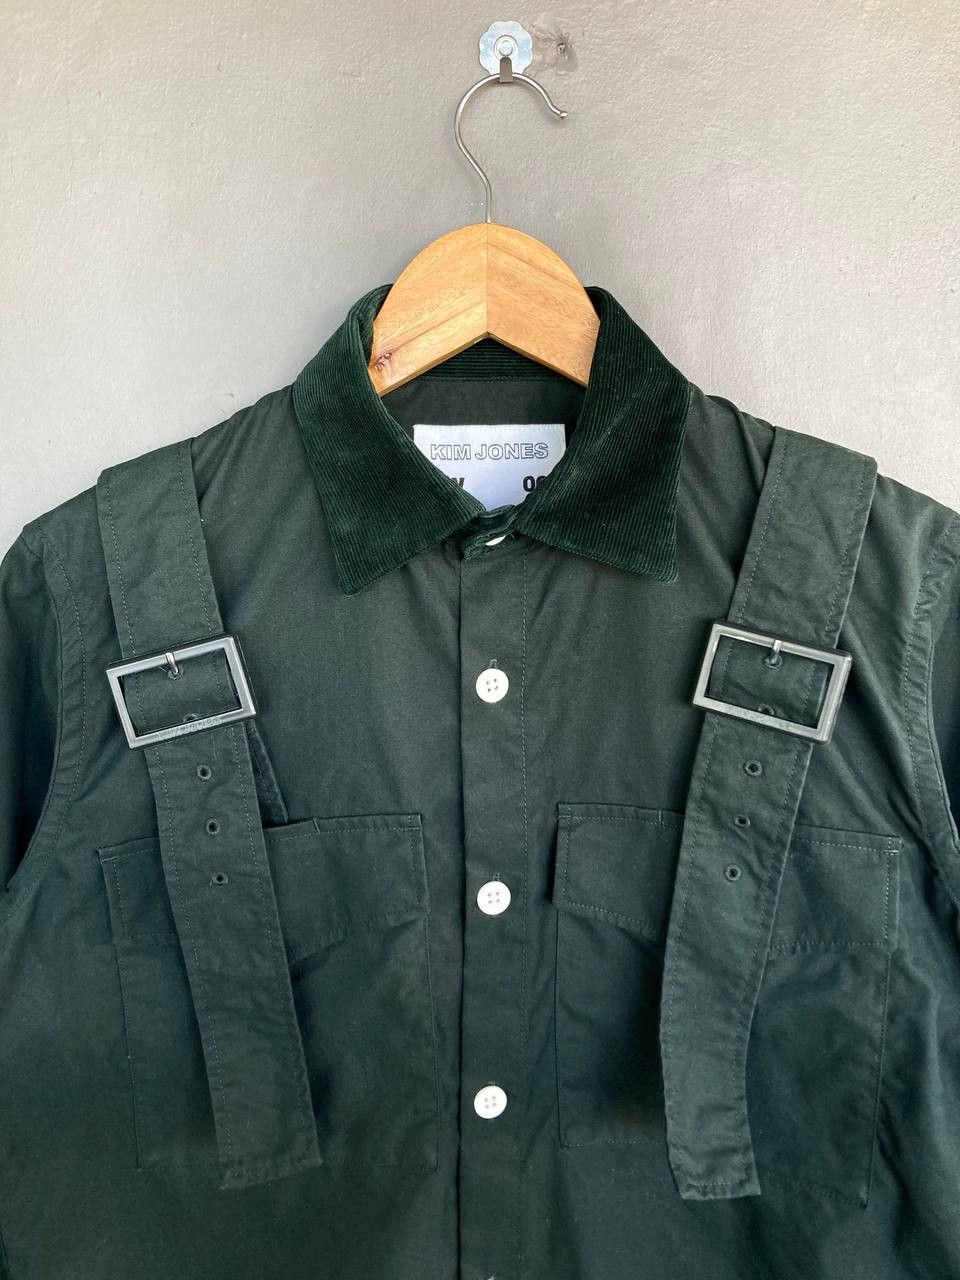 AW18 Kim Jones x GU Military Strap Buttoned Shirt - 4